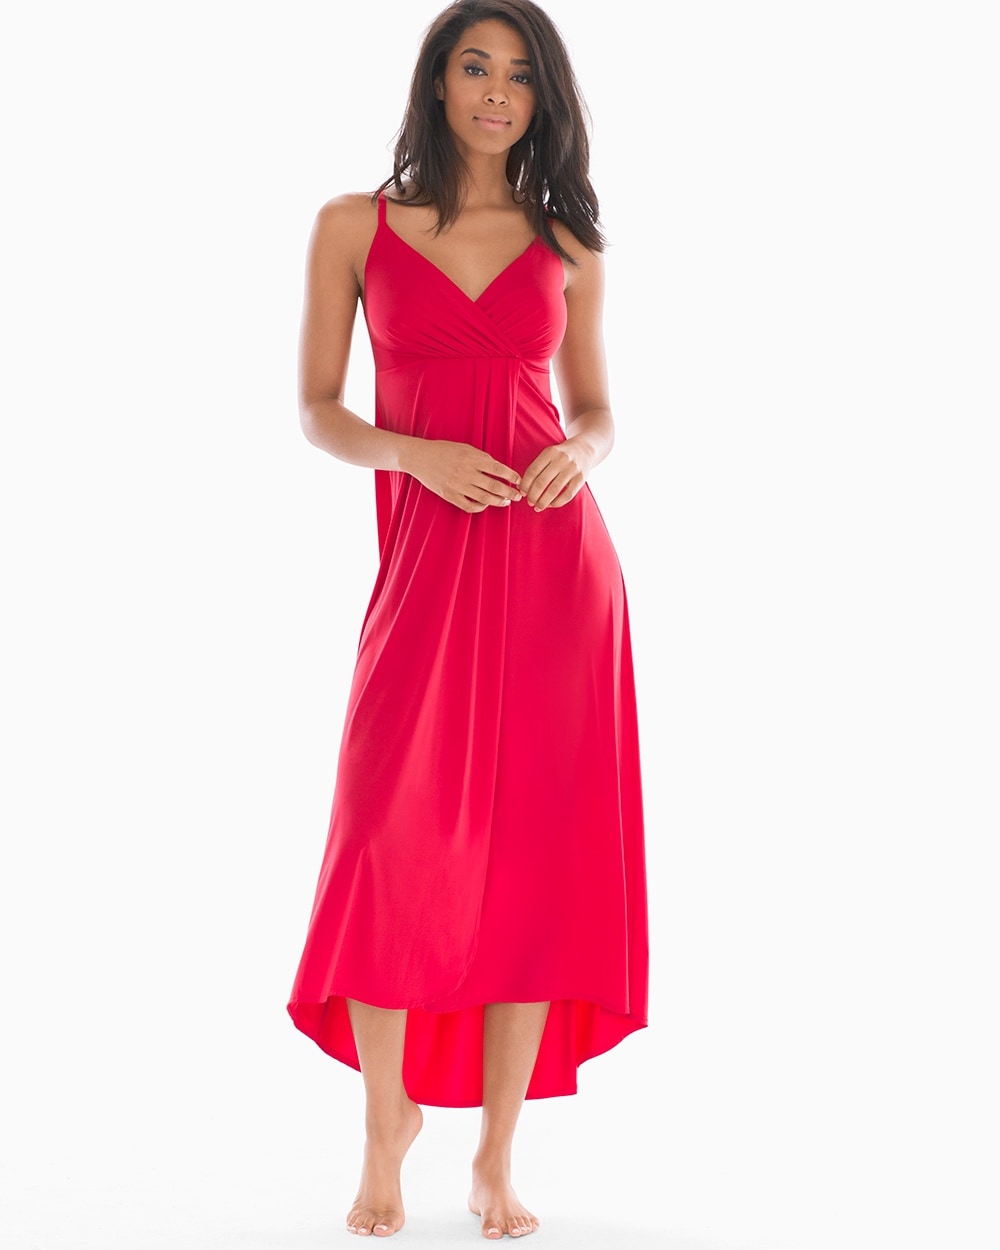 Drapesoft Jersey Tulip Sleeveless Nightgown Red